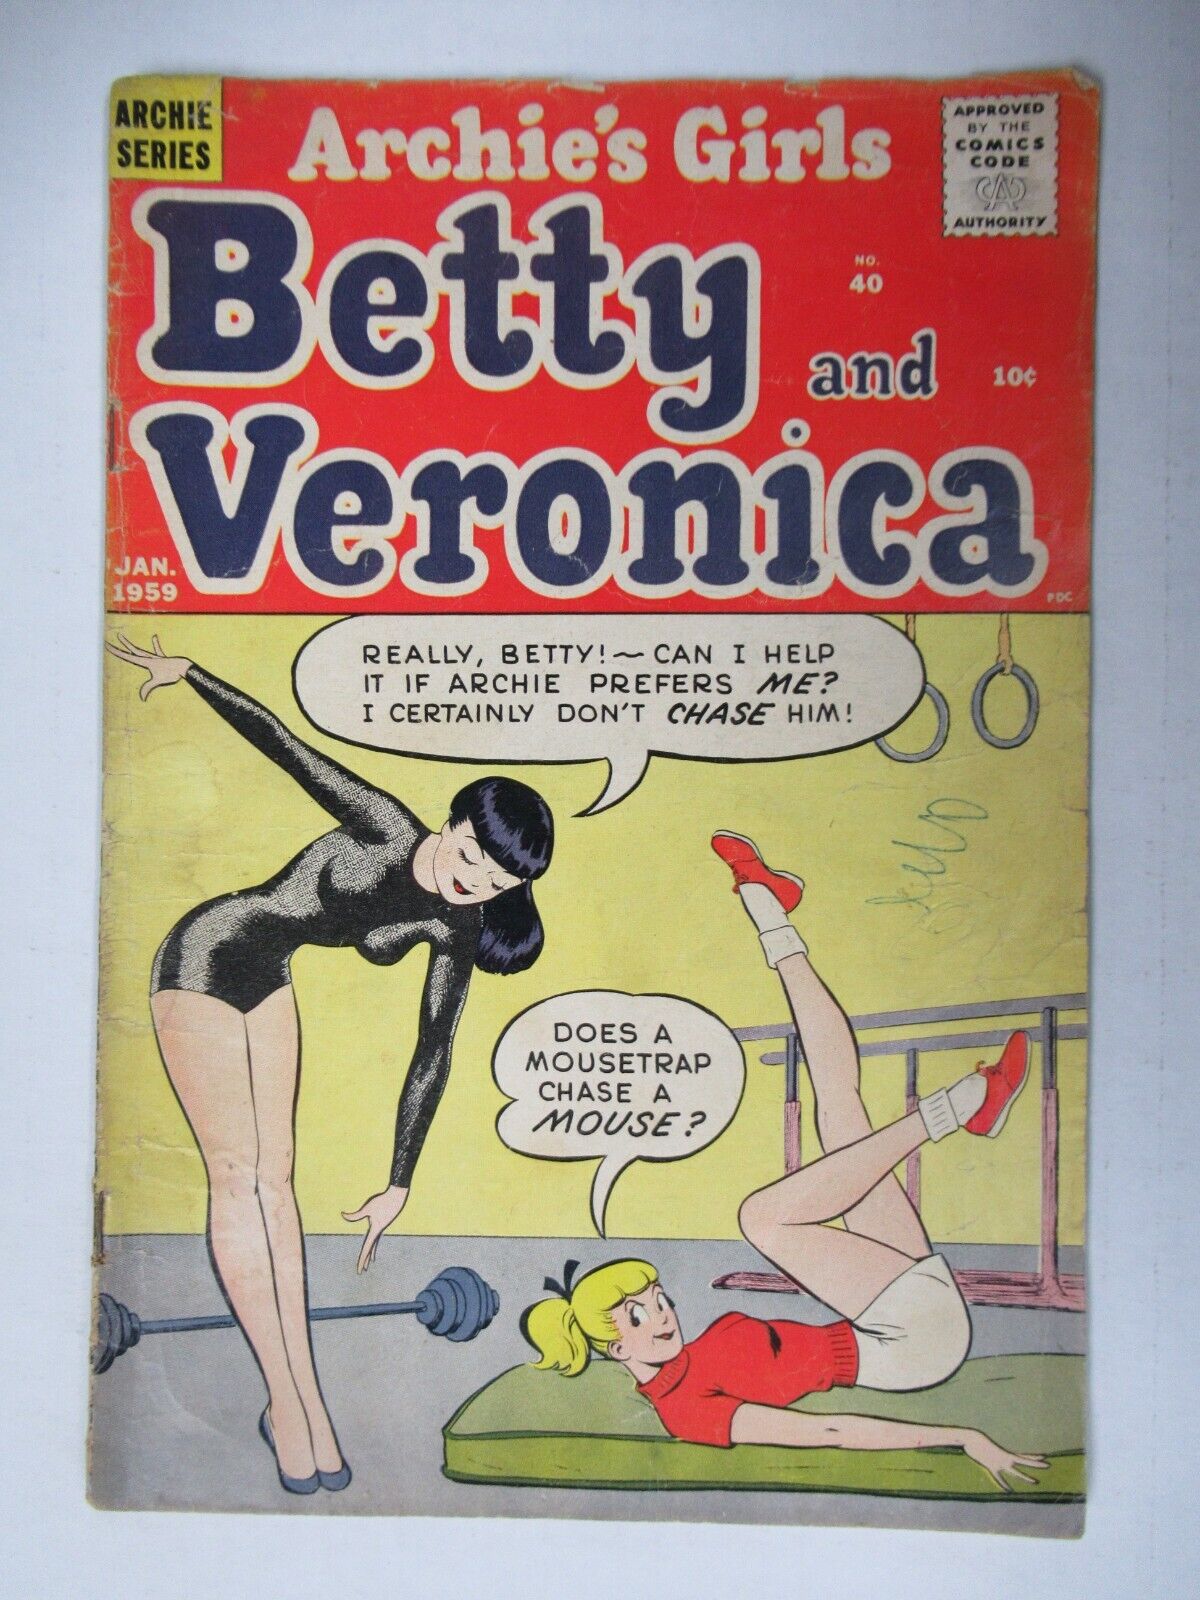 1959 Archie's Girls Betty & Veronica #40